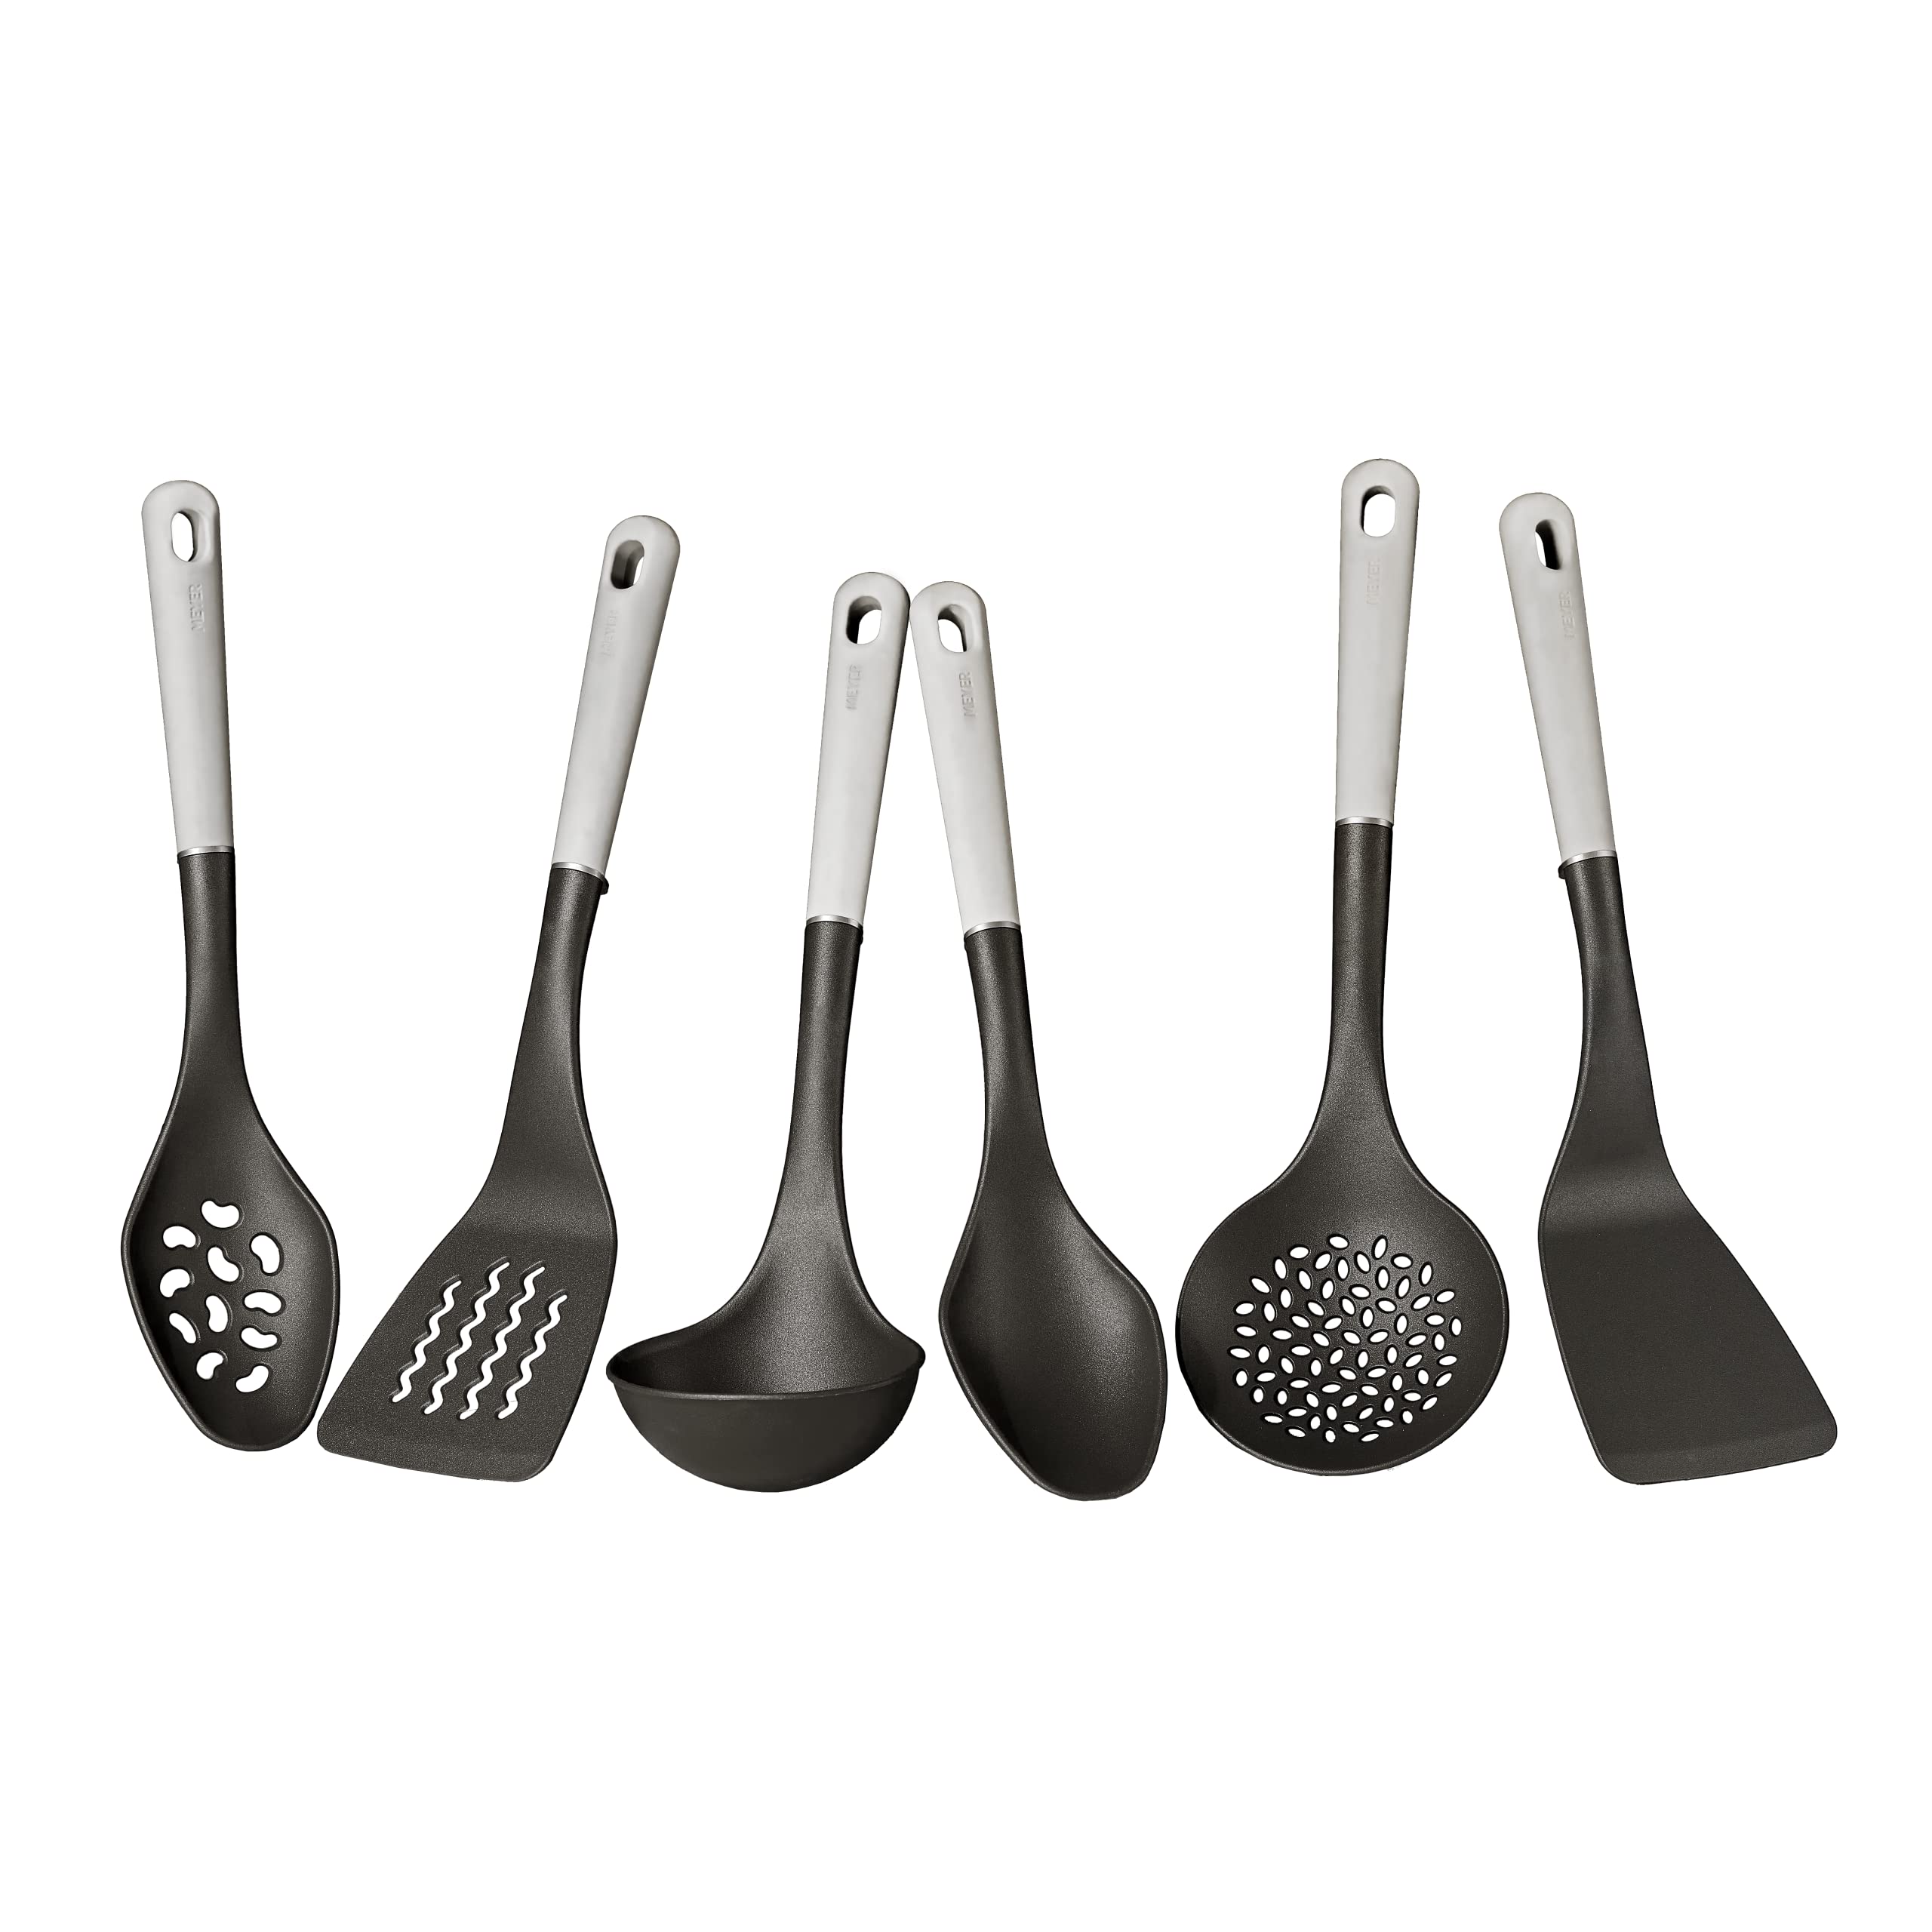 Meyer Everyday Nylon Tools / Cooking Utensils Set, 6 Piece, Black with Gray Handles